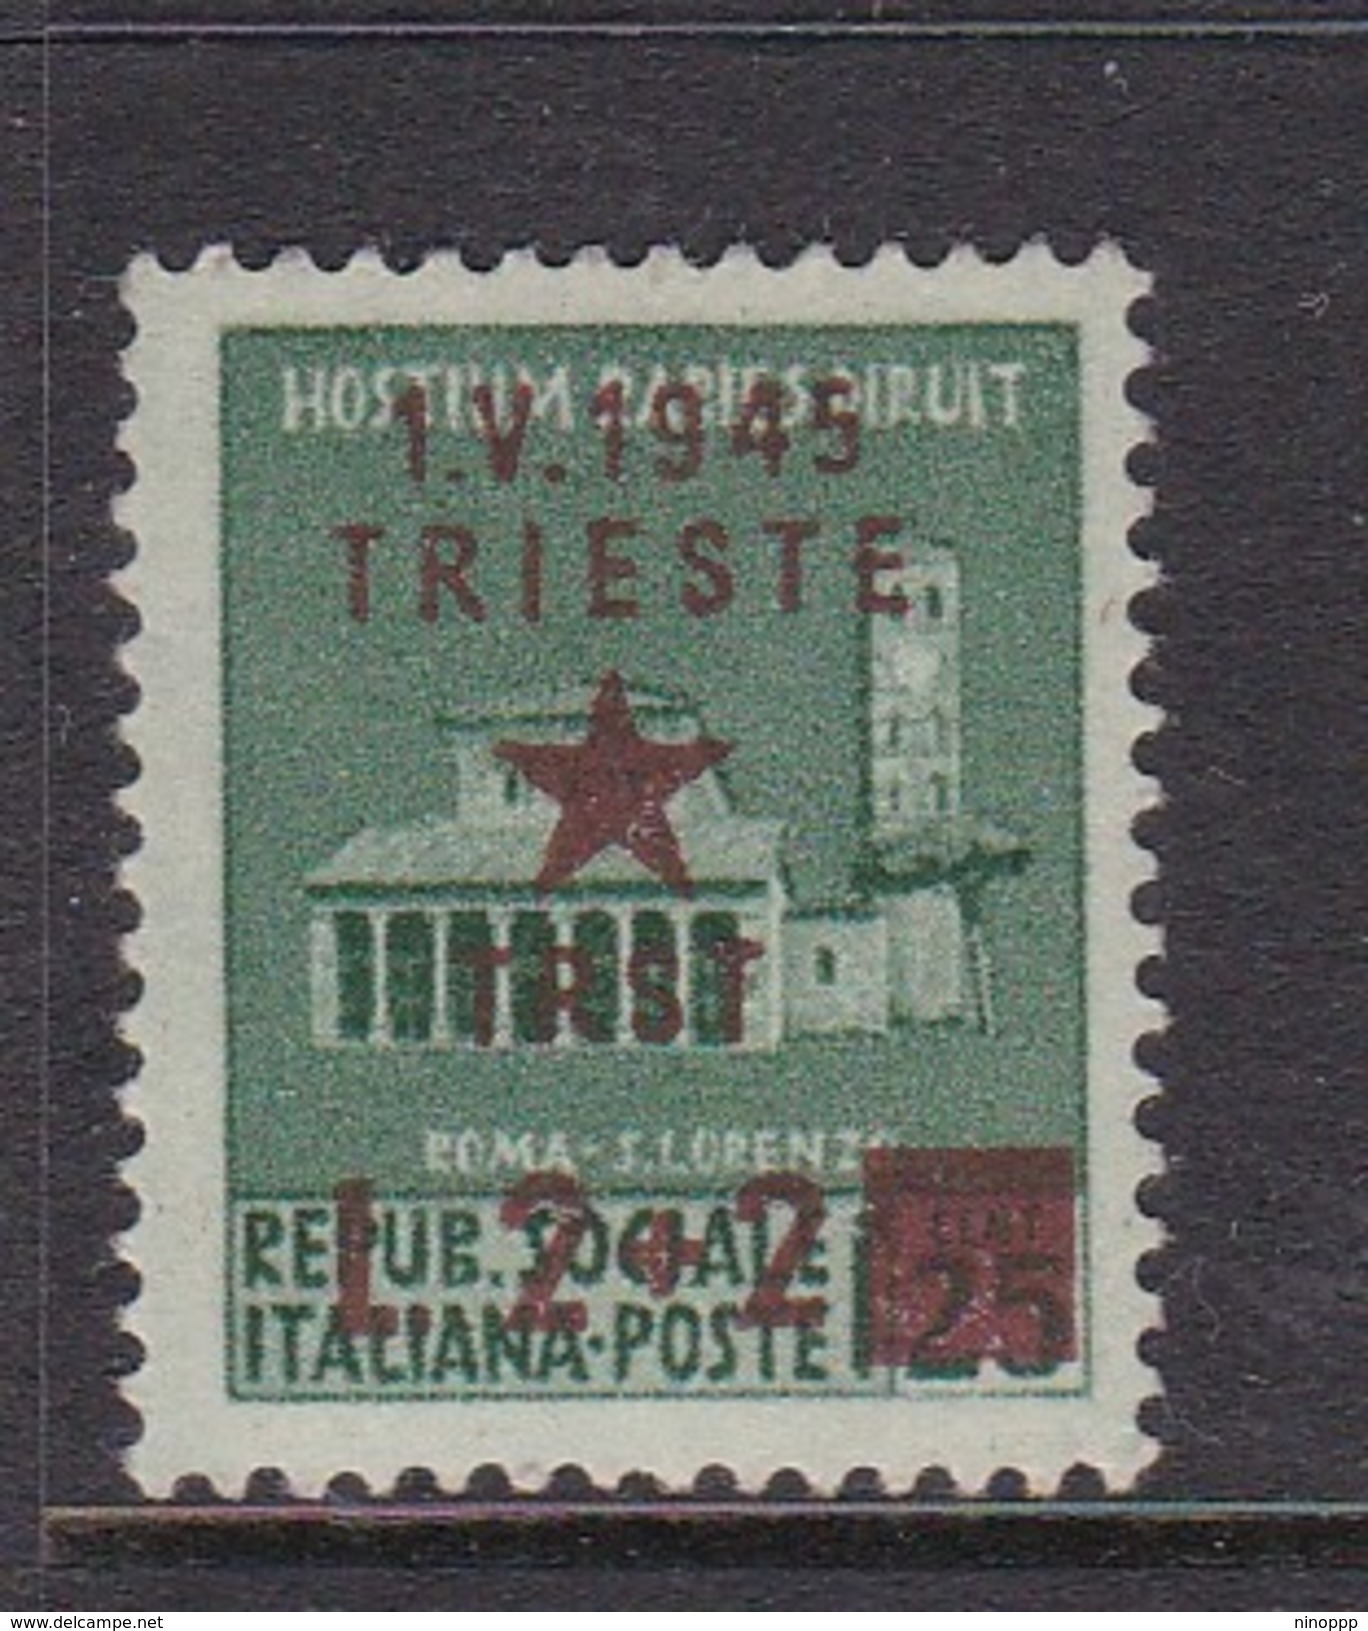 Venezia Giulia And Istria 1945 Yugoslav Trieste Occupation S7 2 Lira+2 Lira On 25c Green Mint Never Hinged - Occ. Yougoslave: Trieste